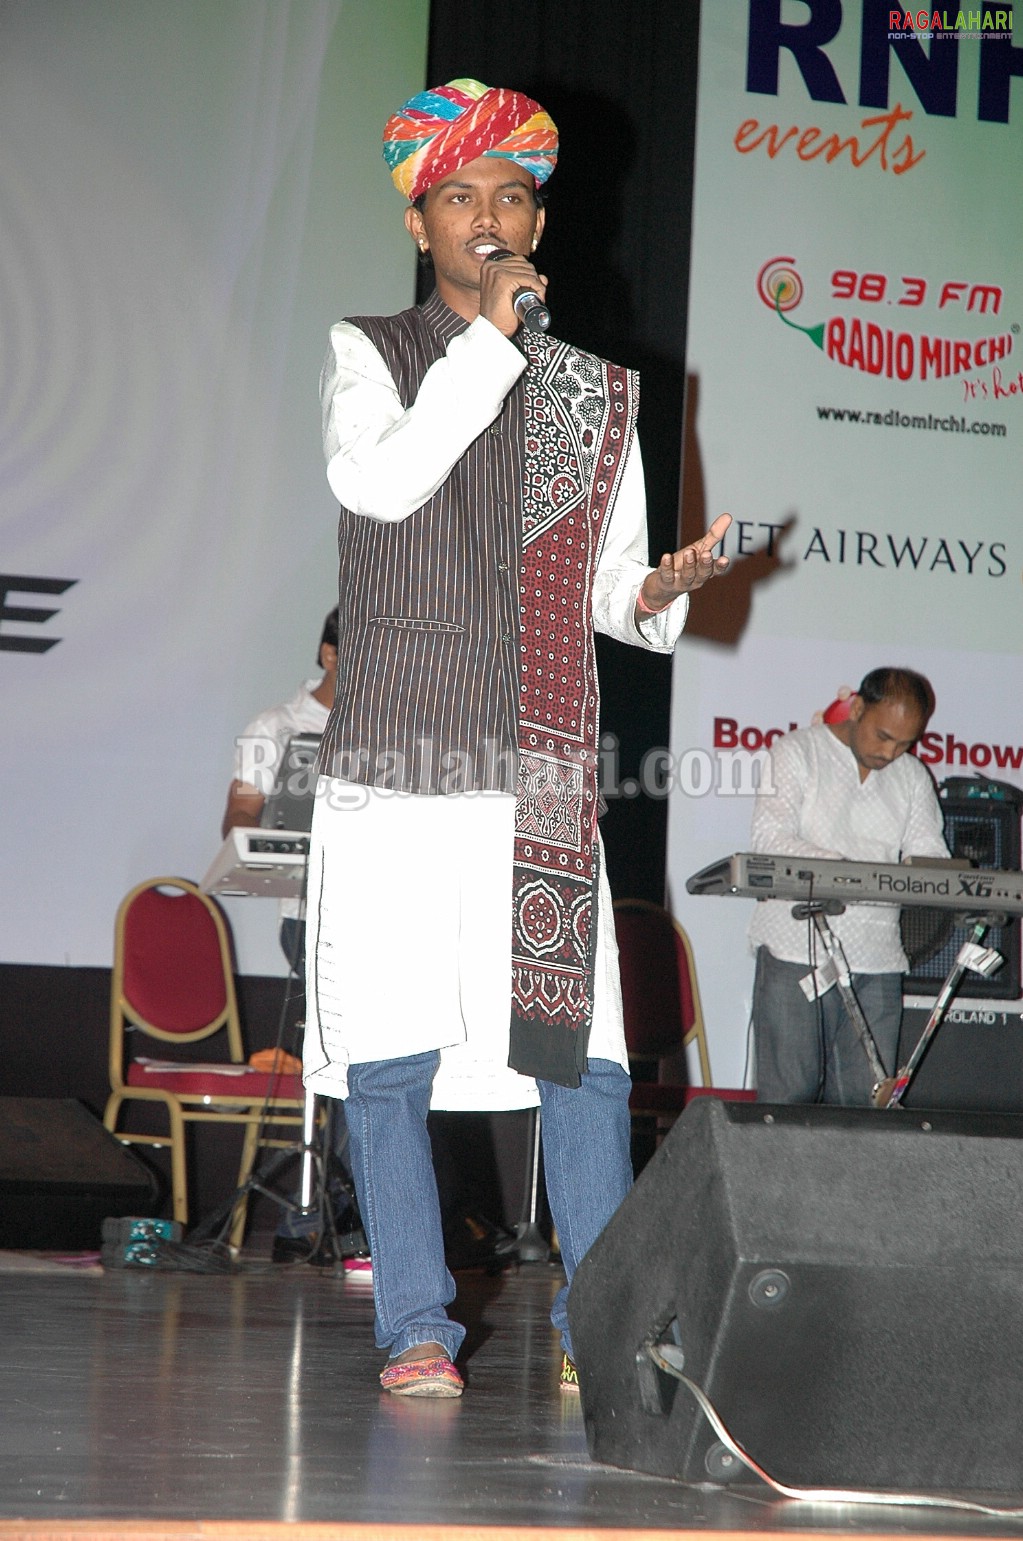 Sreeram Chandra Live Concert, Hyd